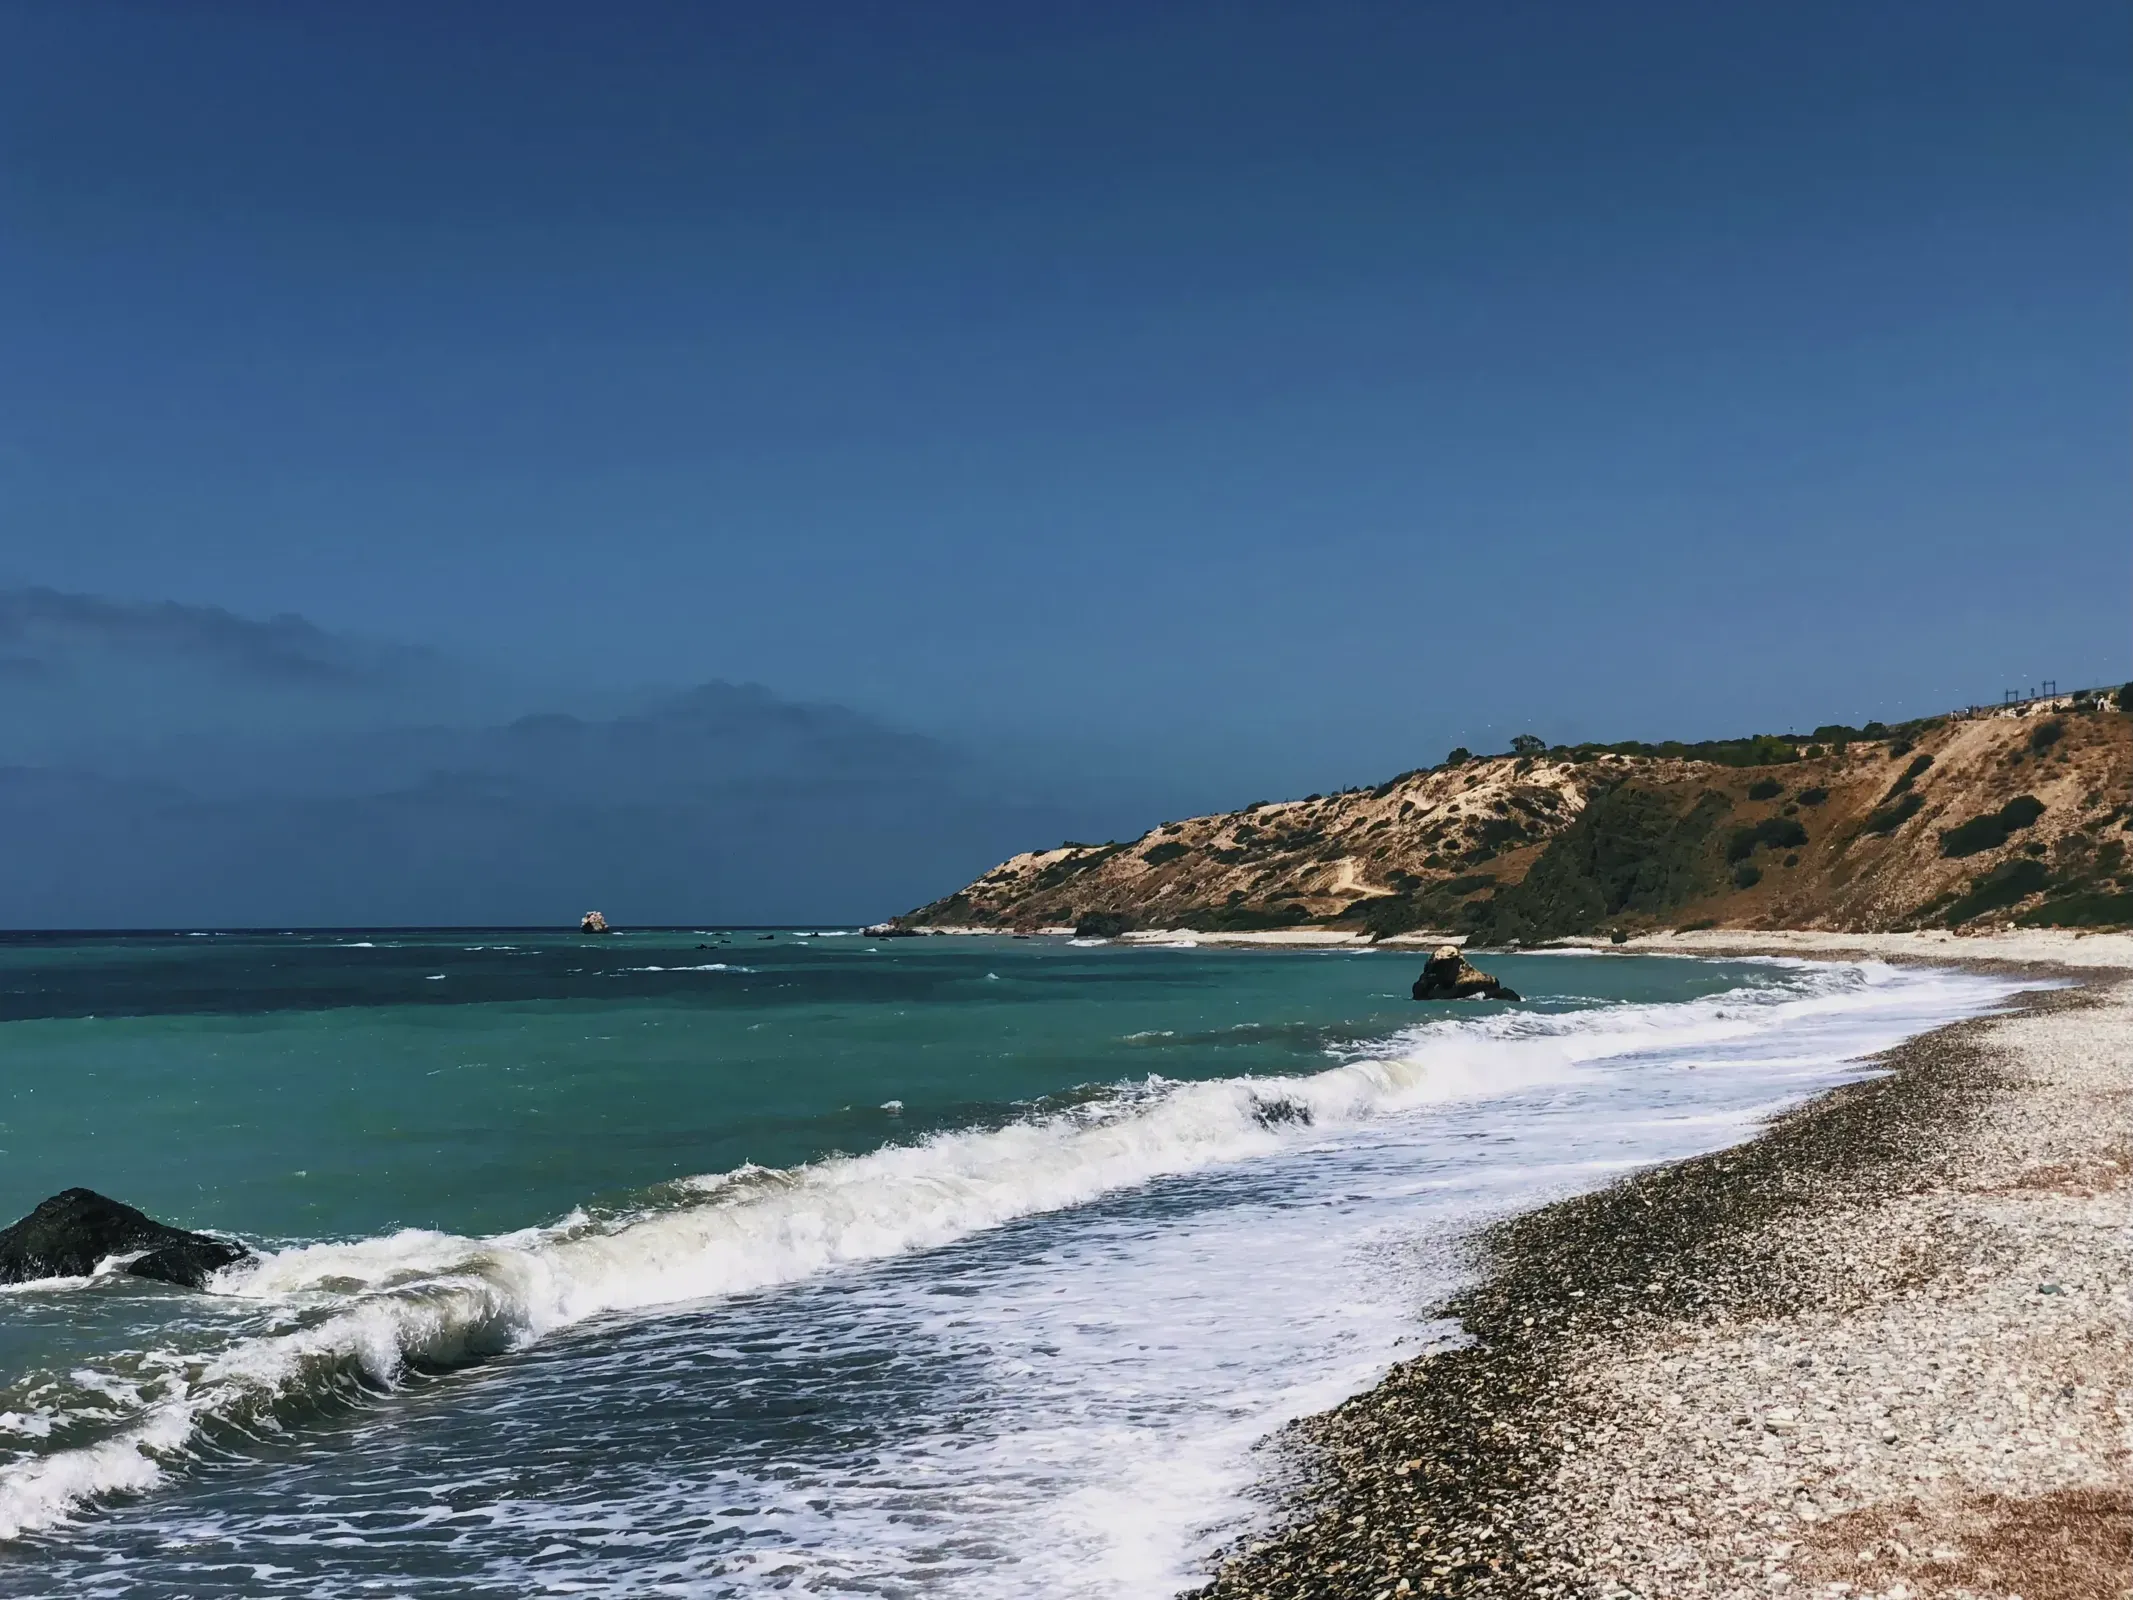 Aphrodite’s Rock - Waves crashing dramatically on a beach, providing an awe-inspiring view of the shoreline.